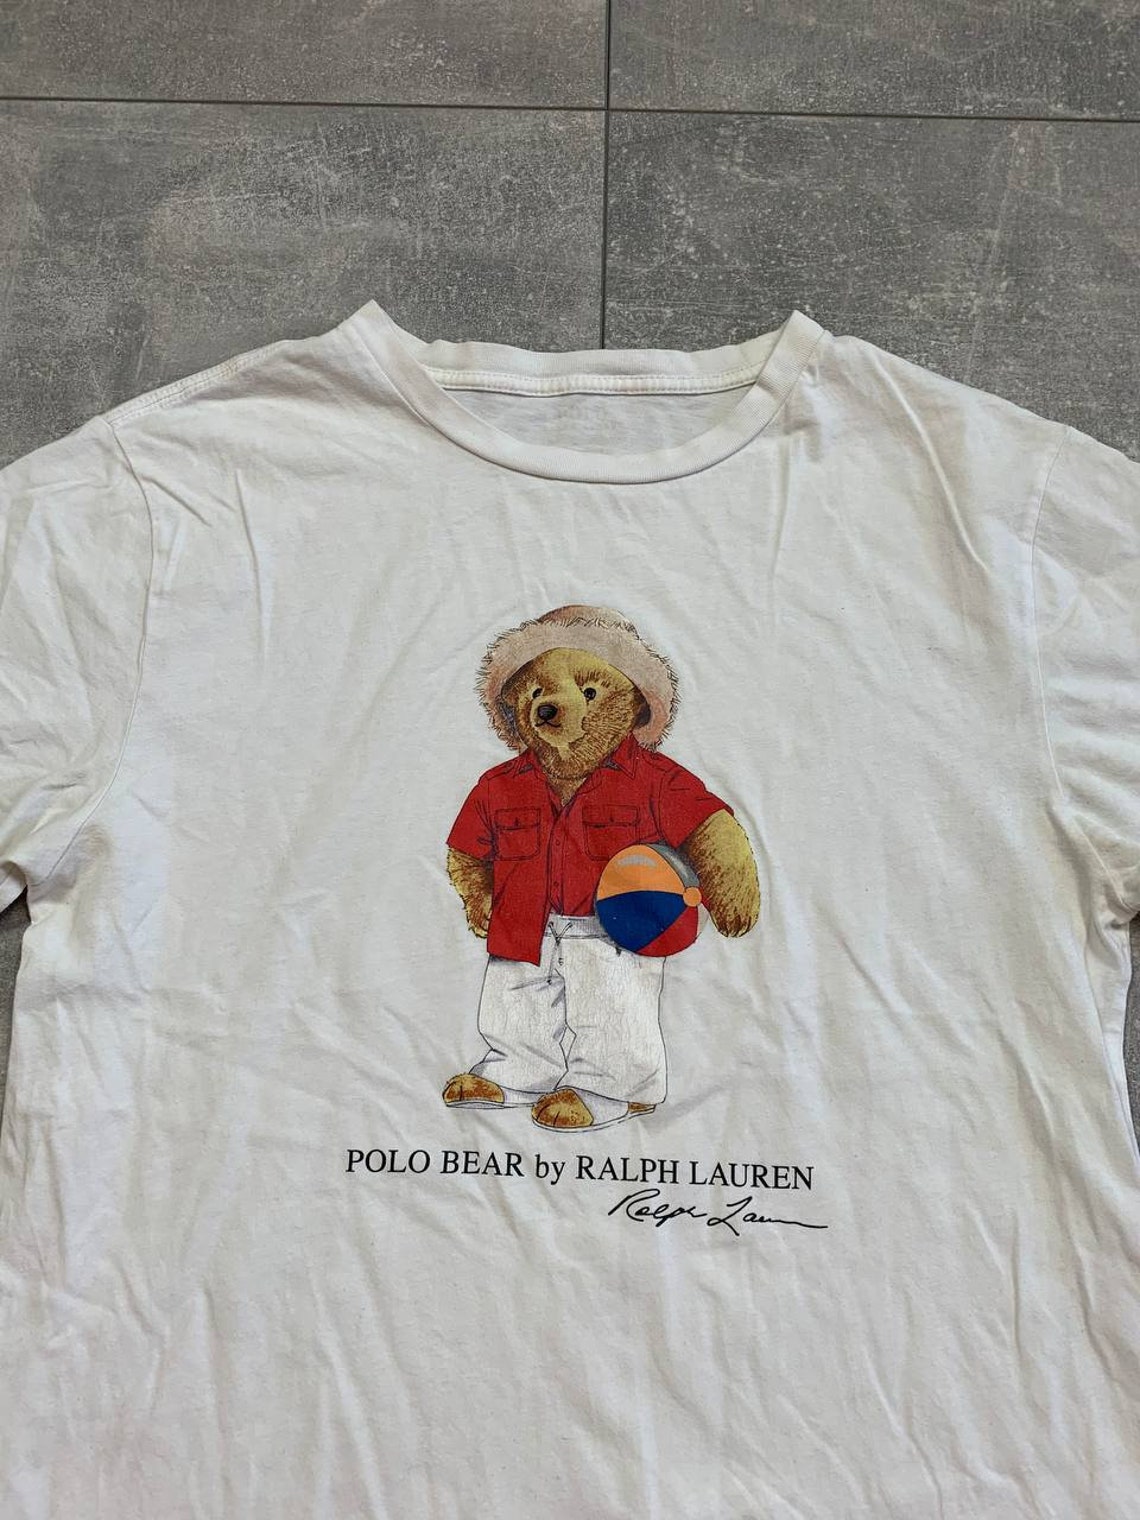 Polo bear Ralph Lauren big logo T-shirt | Etsy